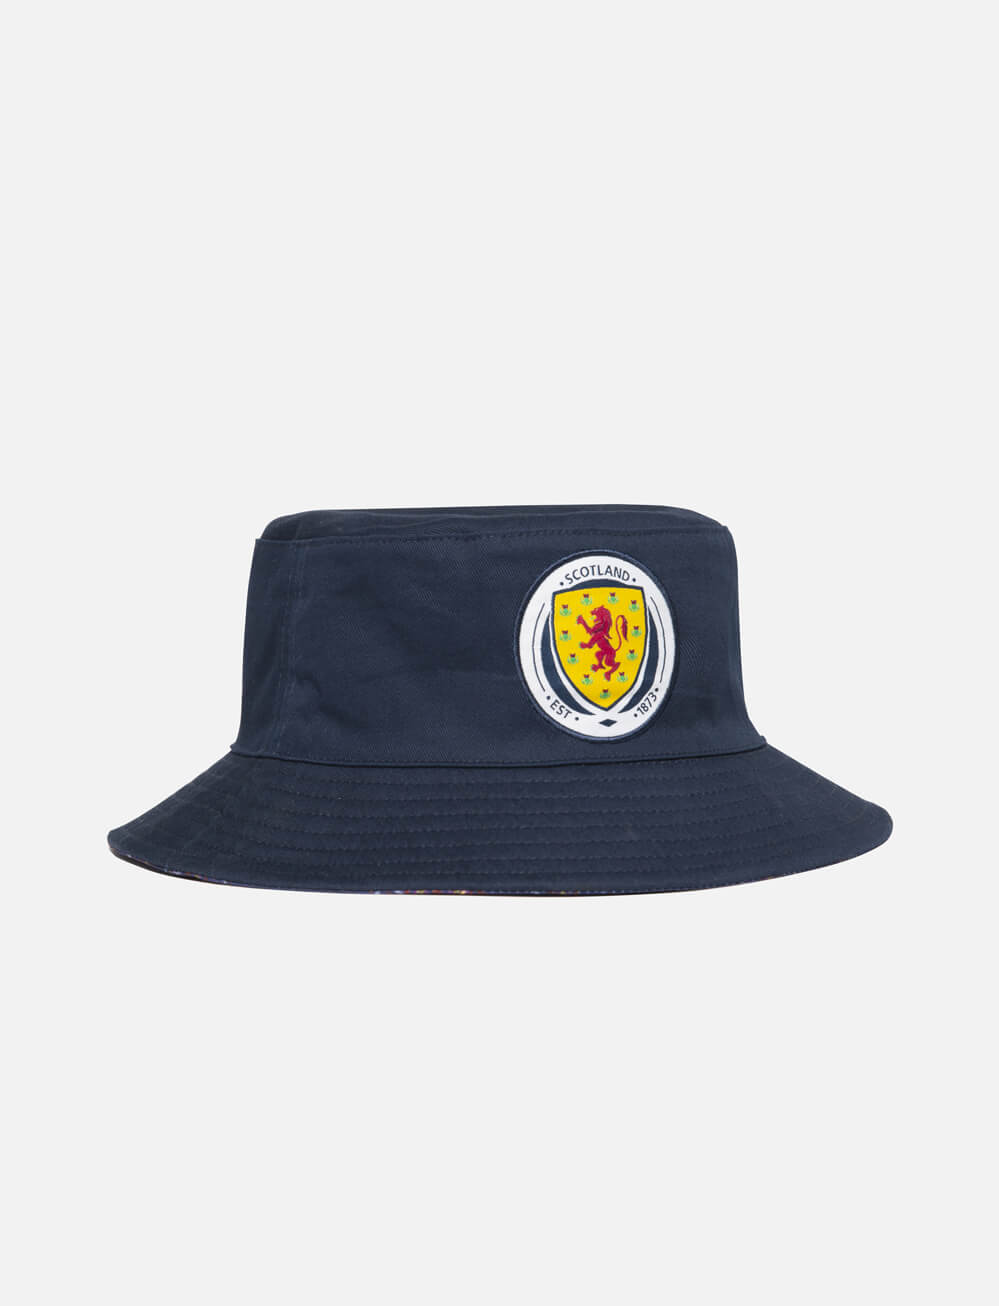 Official Team Scotland Bucket Hat - Navy